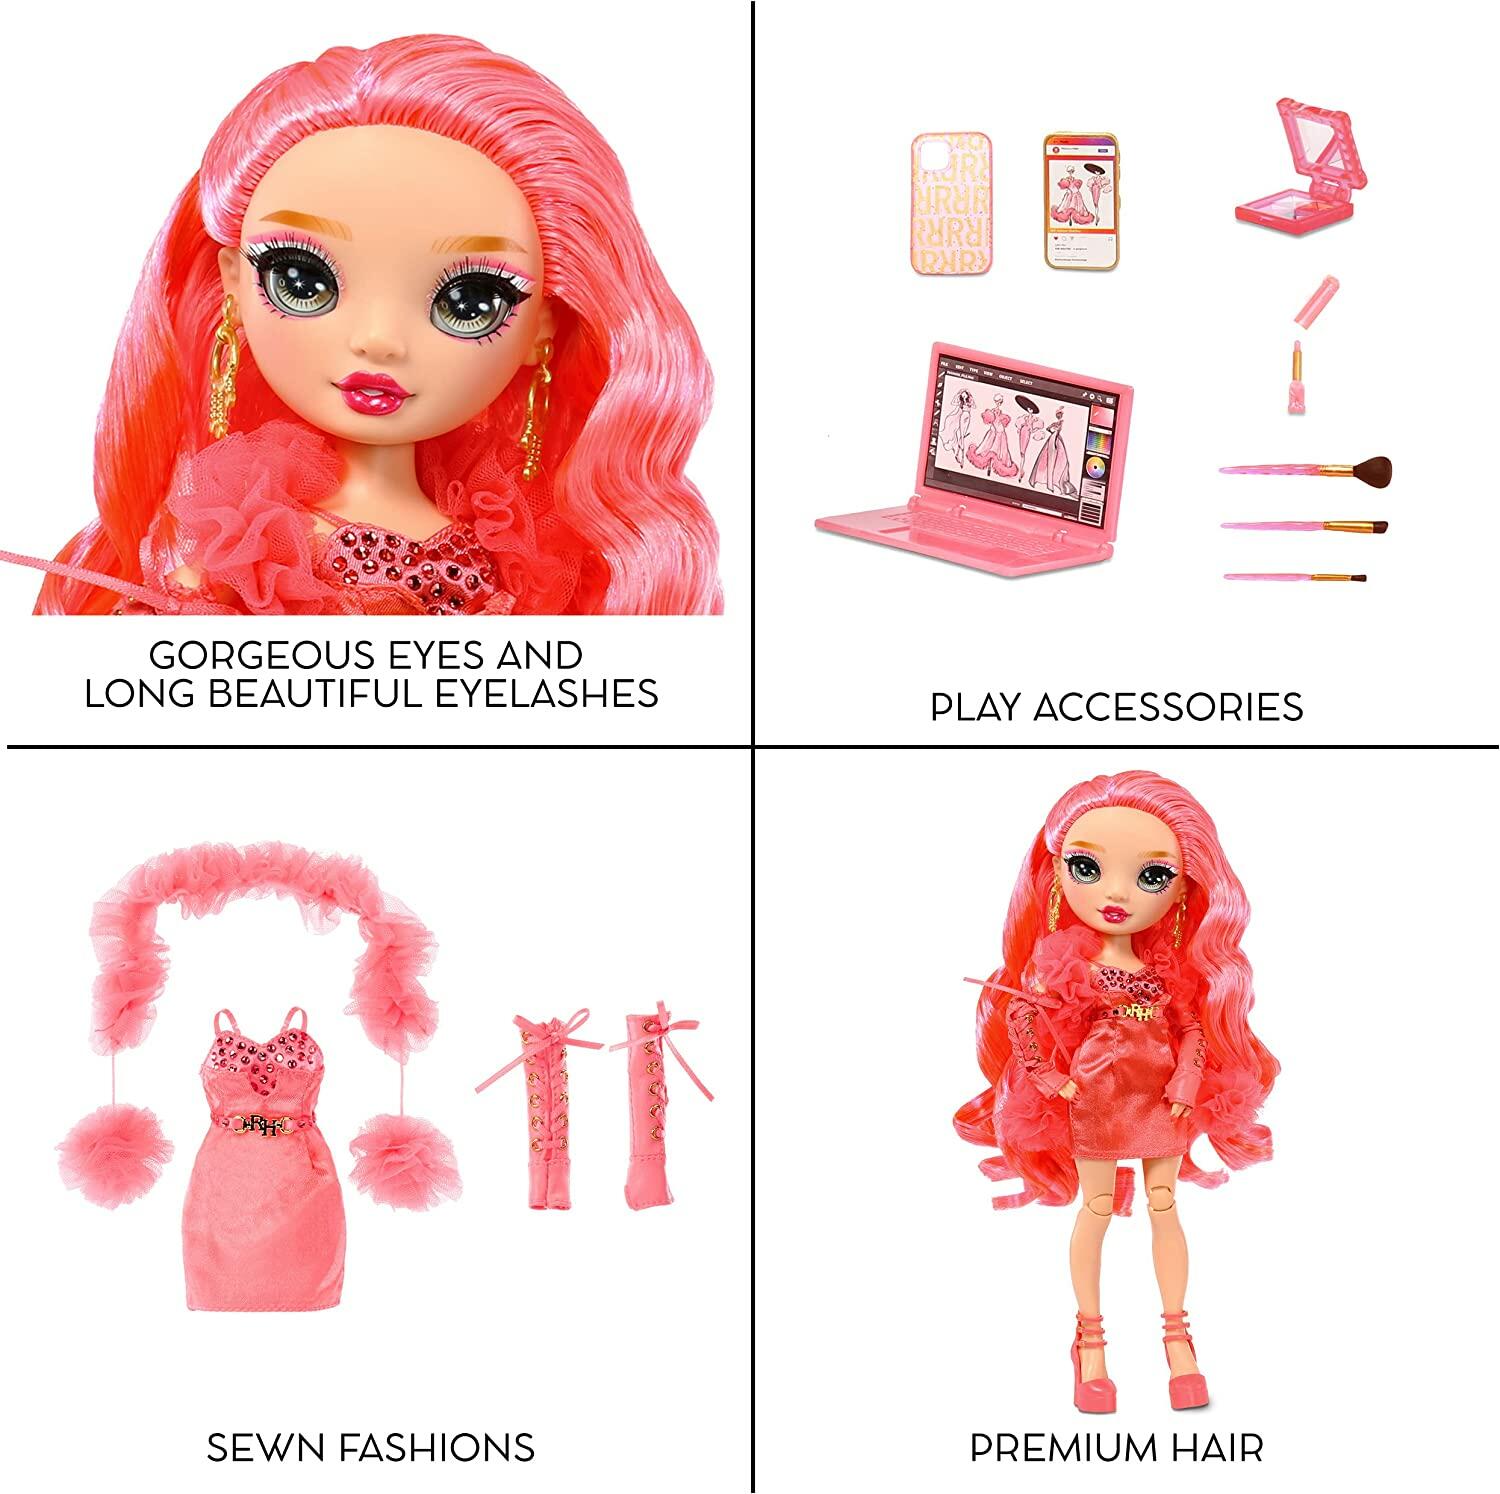 Rainbow High Priscilla - Pink Fashion Doll